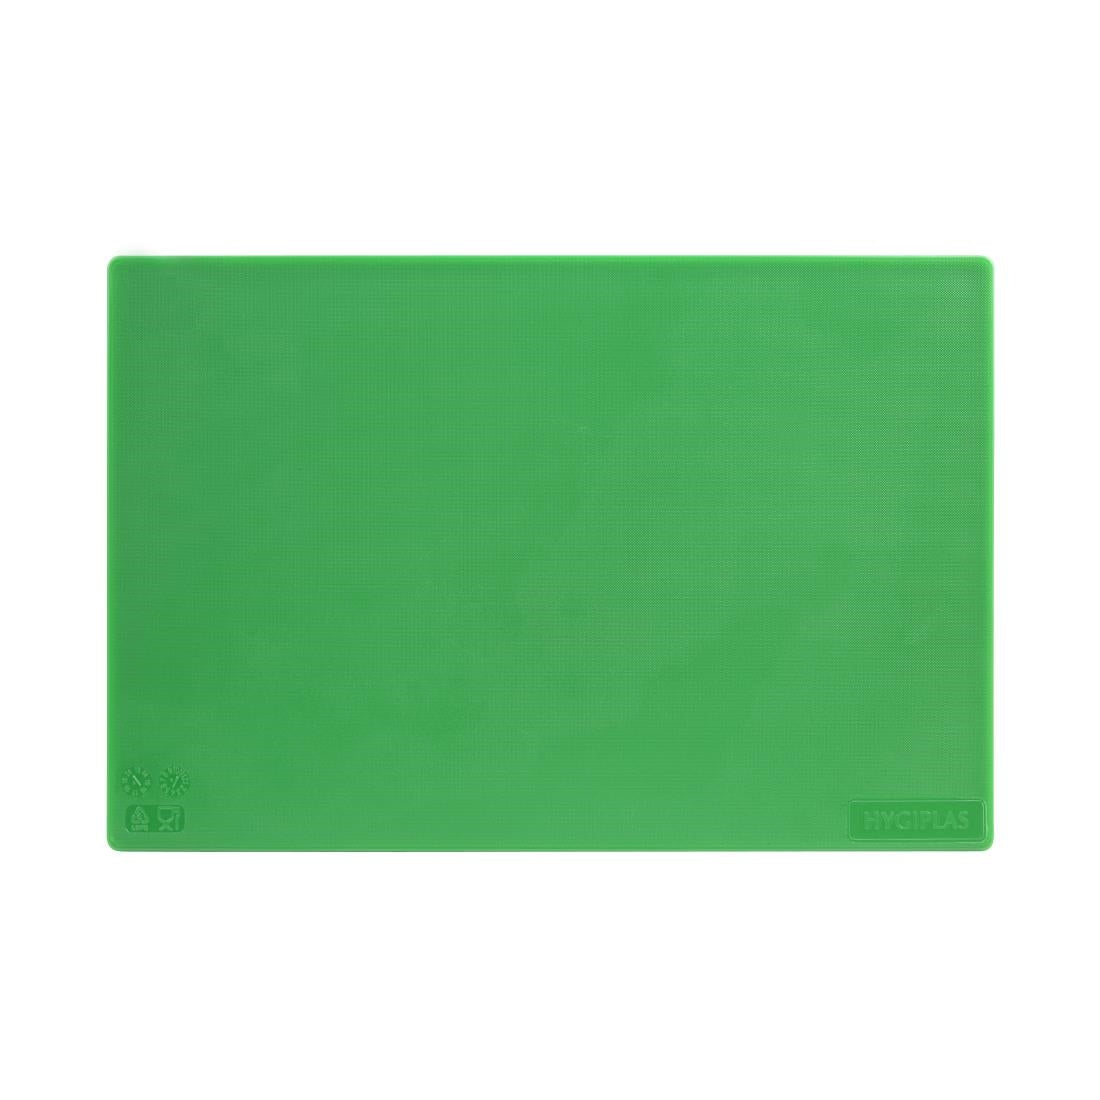 EDLP - Hygiplas Anti-bacterial Low Density Chopping Board Green - 450x300x10mm